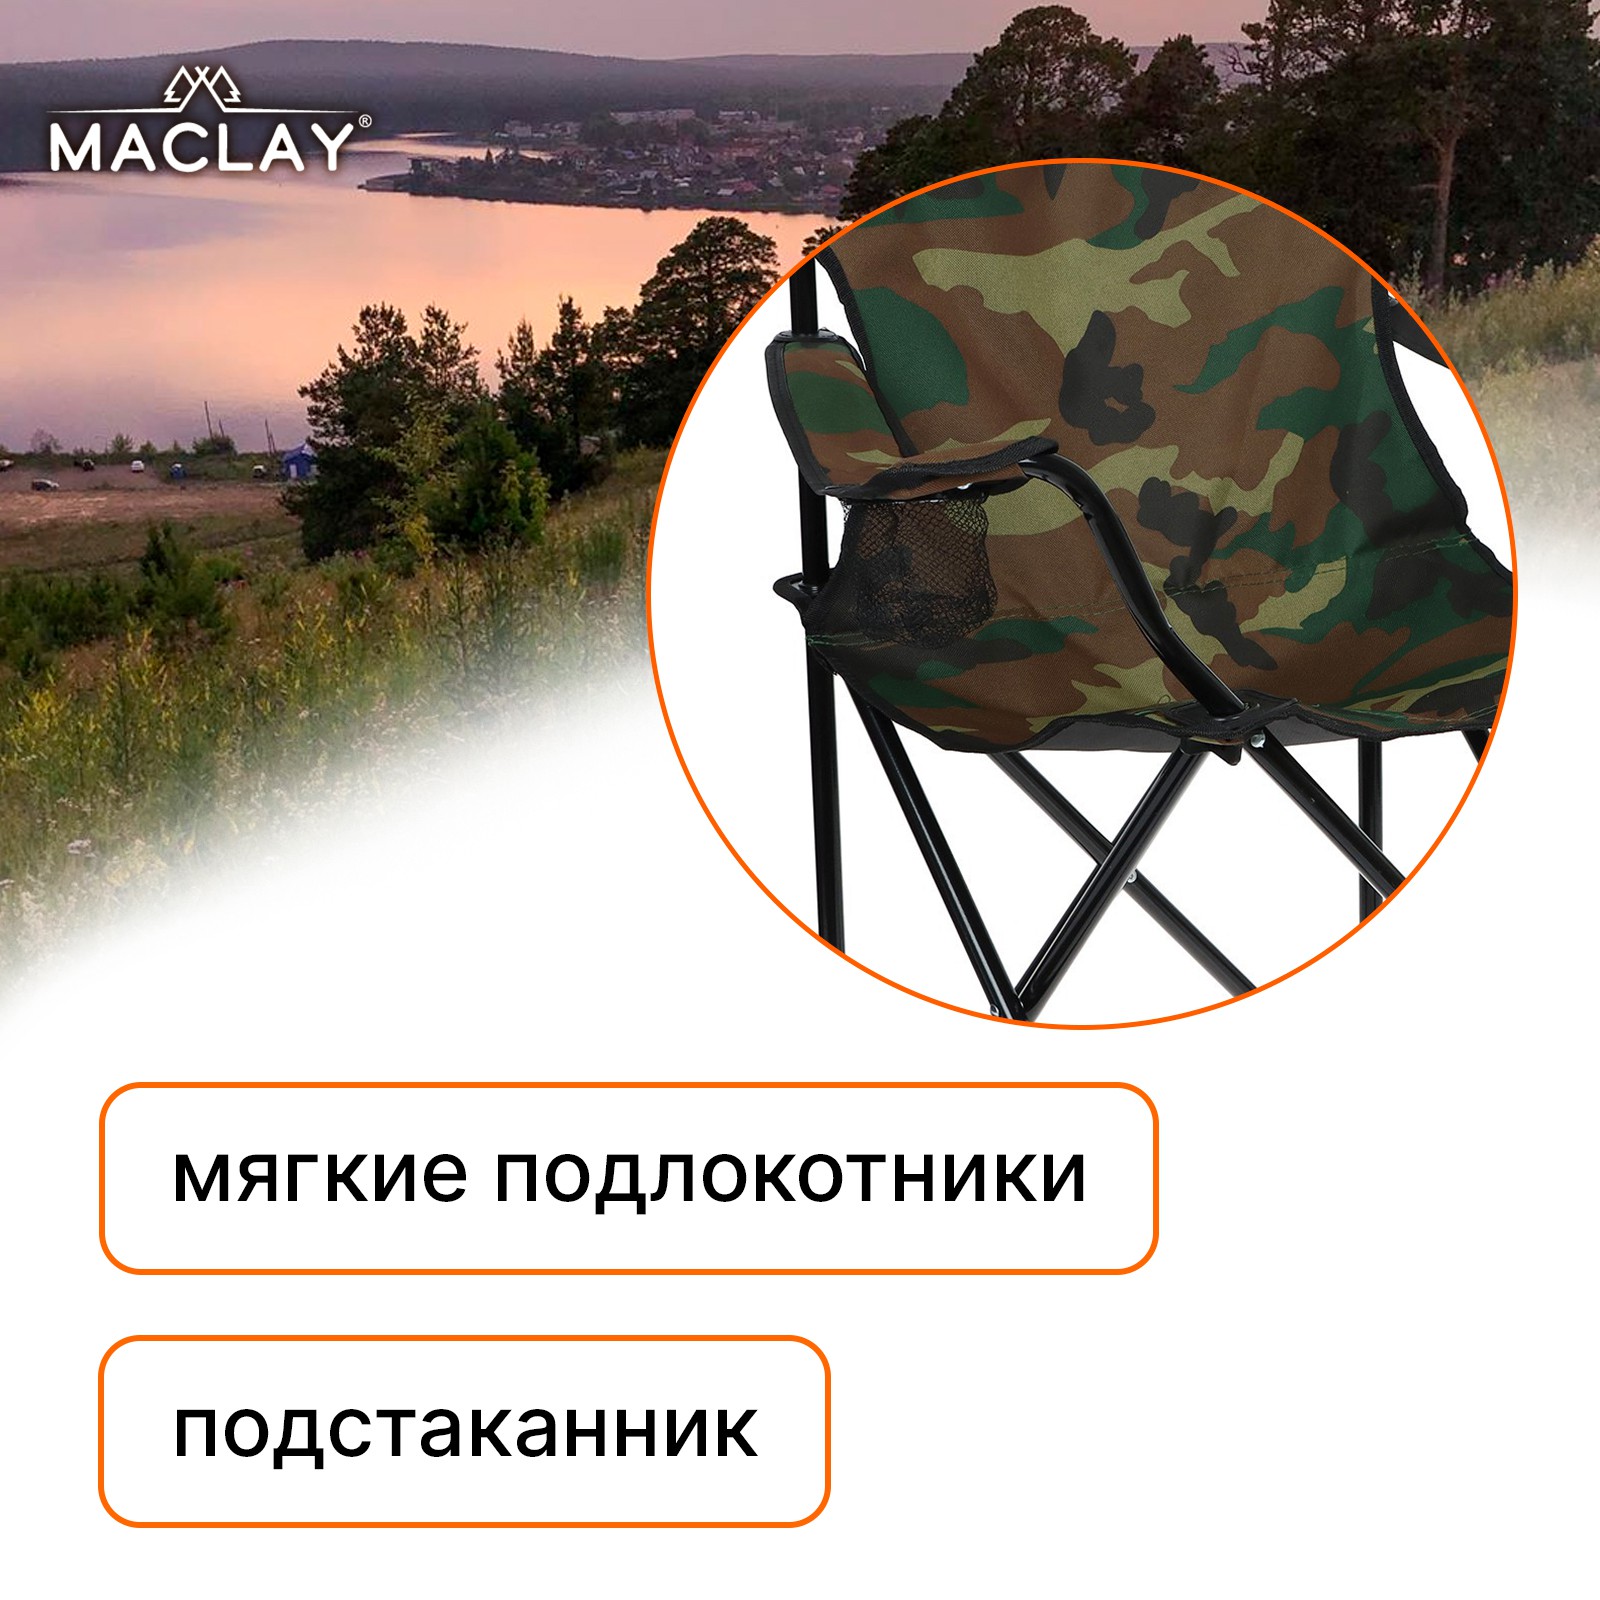 Кресло Maclay туристическое с подстаканником р. 50 х 50 х 80 см до 80 кг цвет хаки - фото 2